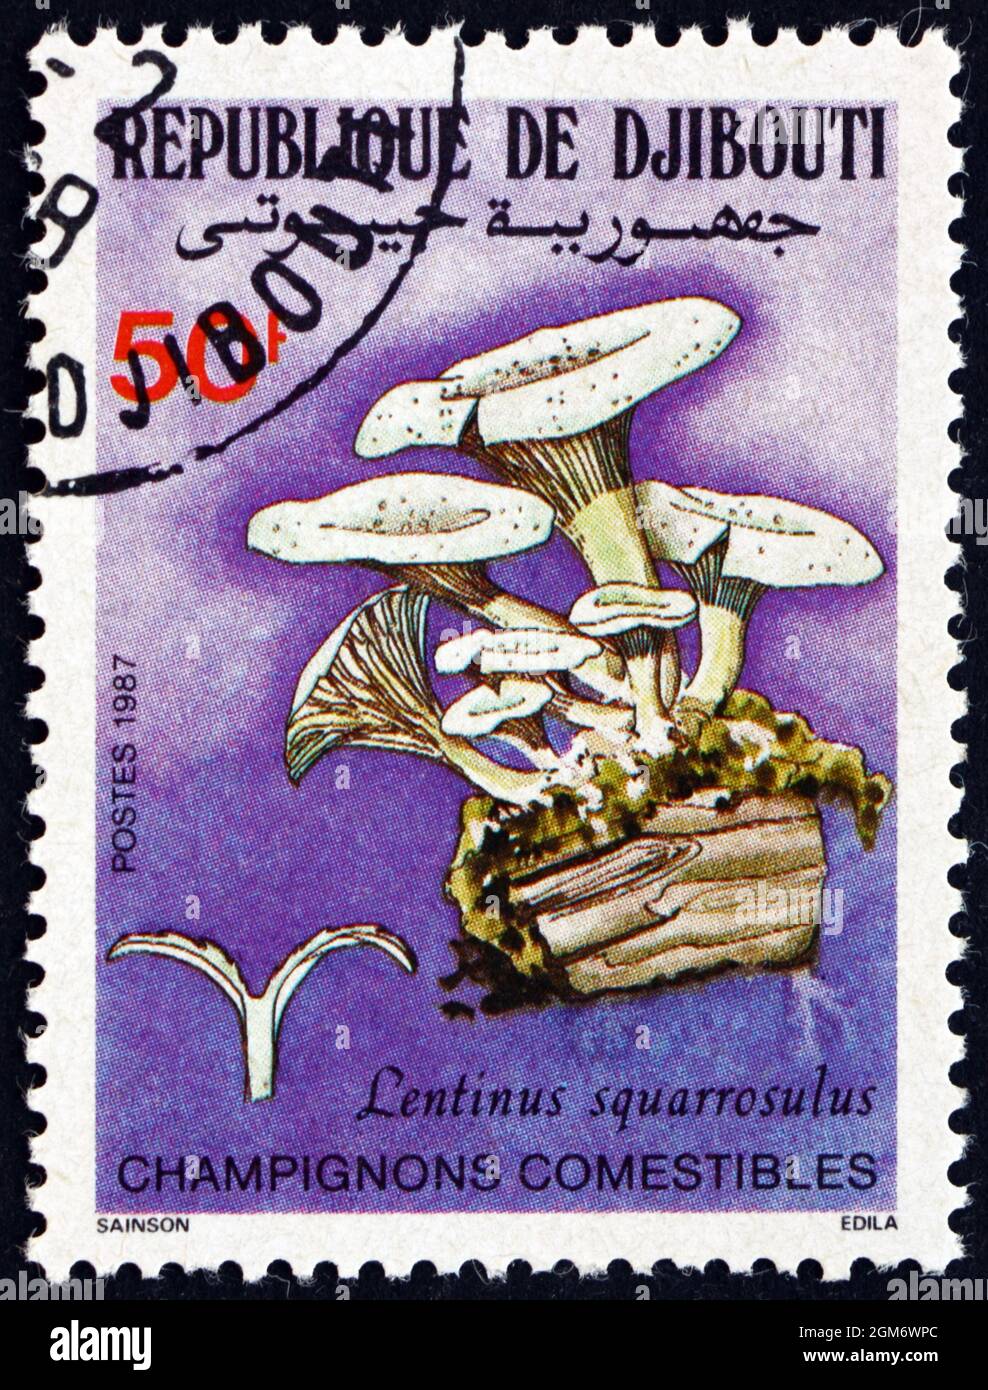 DJIBOUTI - CIRCA 1987: a stamp printed in the Djibouti shows lentinus squarrosulus, mushroom, circa 1987 Stock Photo